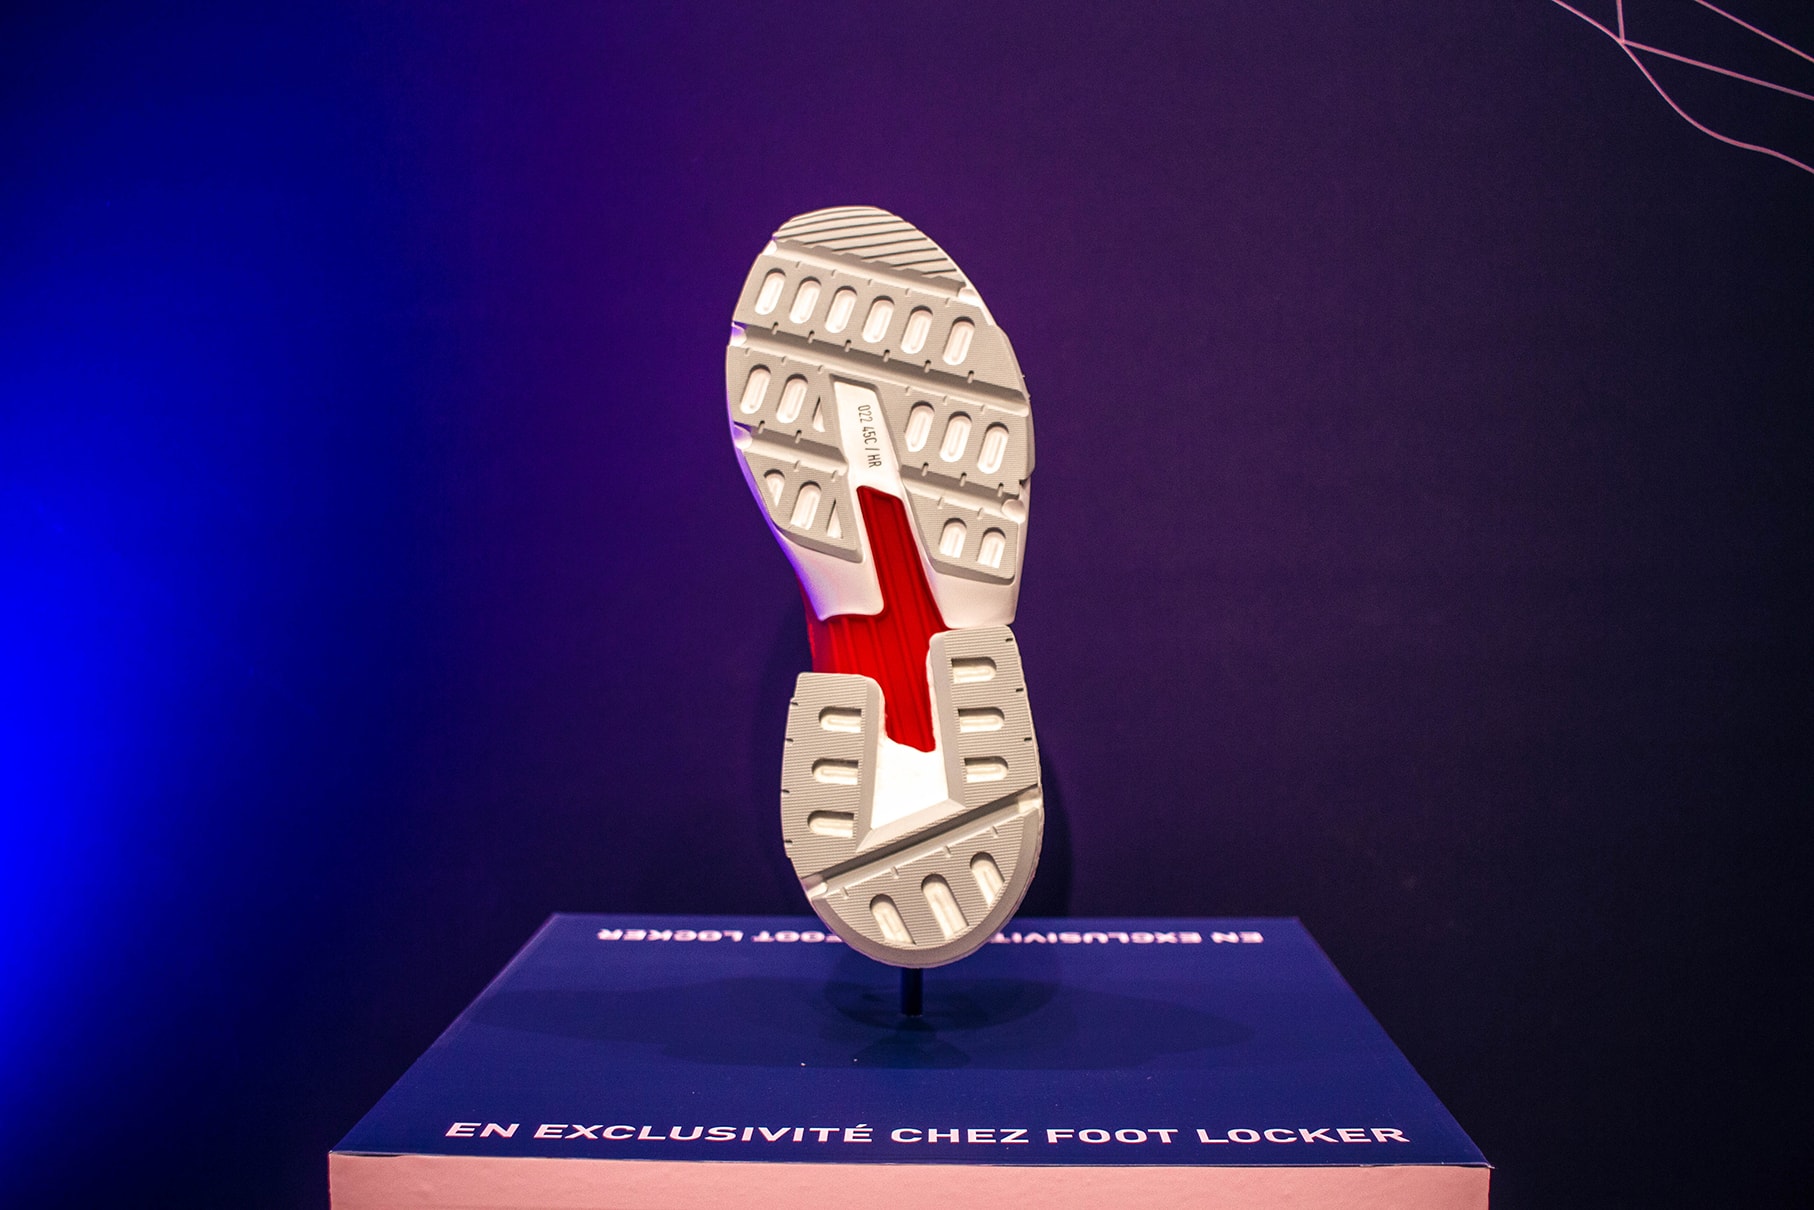 adidas Footlocker Europe P.O.D. System Kyu Steed Nelson Chris Macari Interview